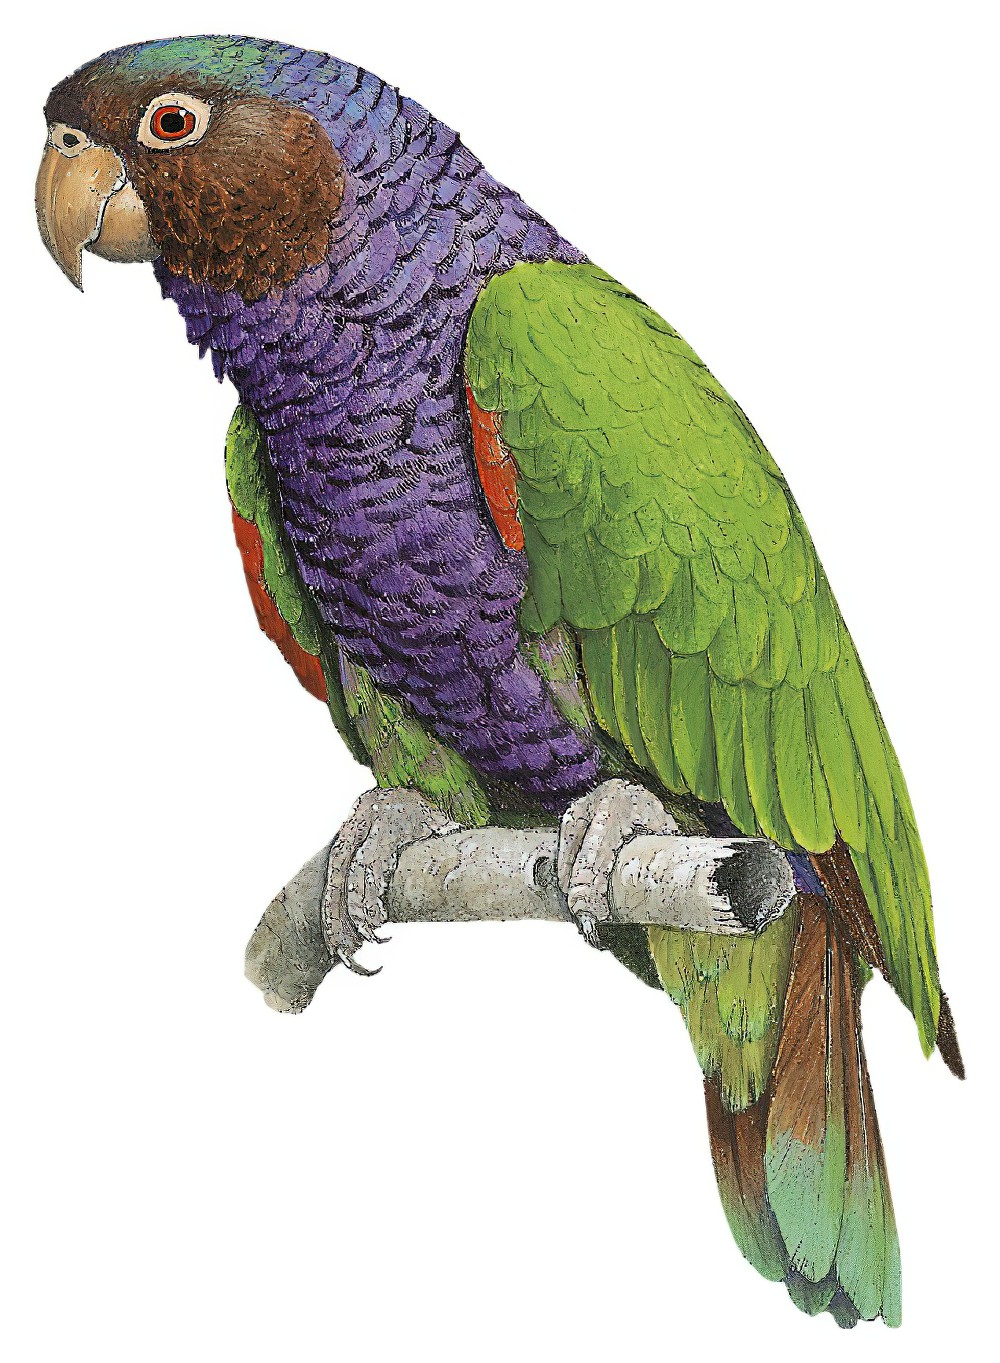 Imperial Parrot / Amazona imperialis